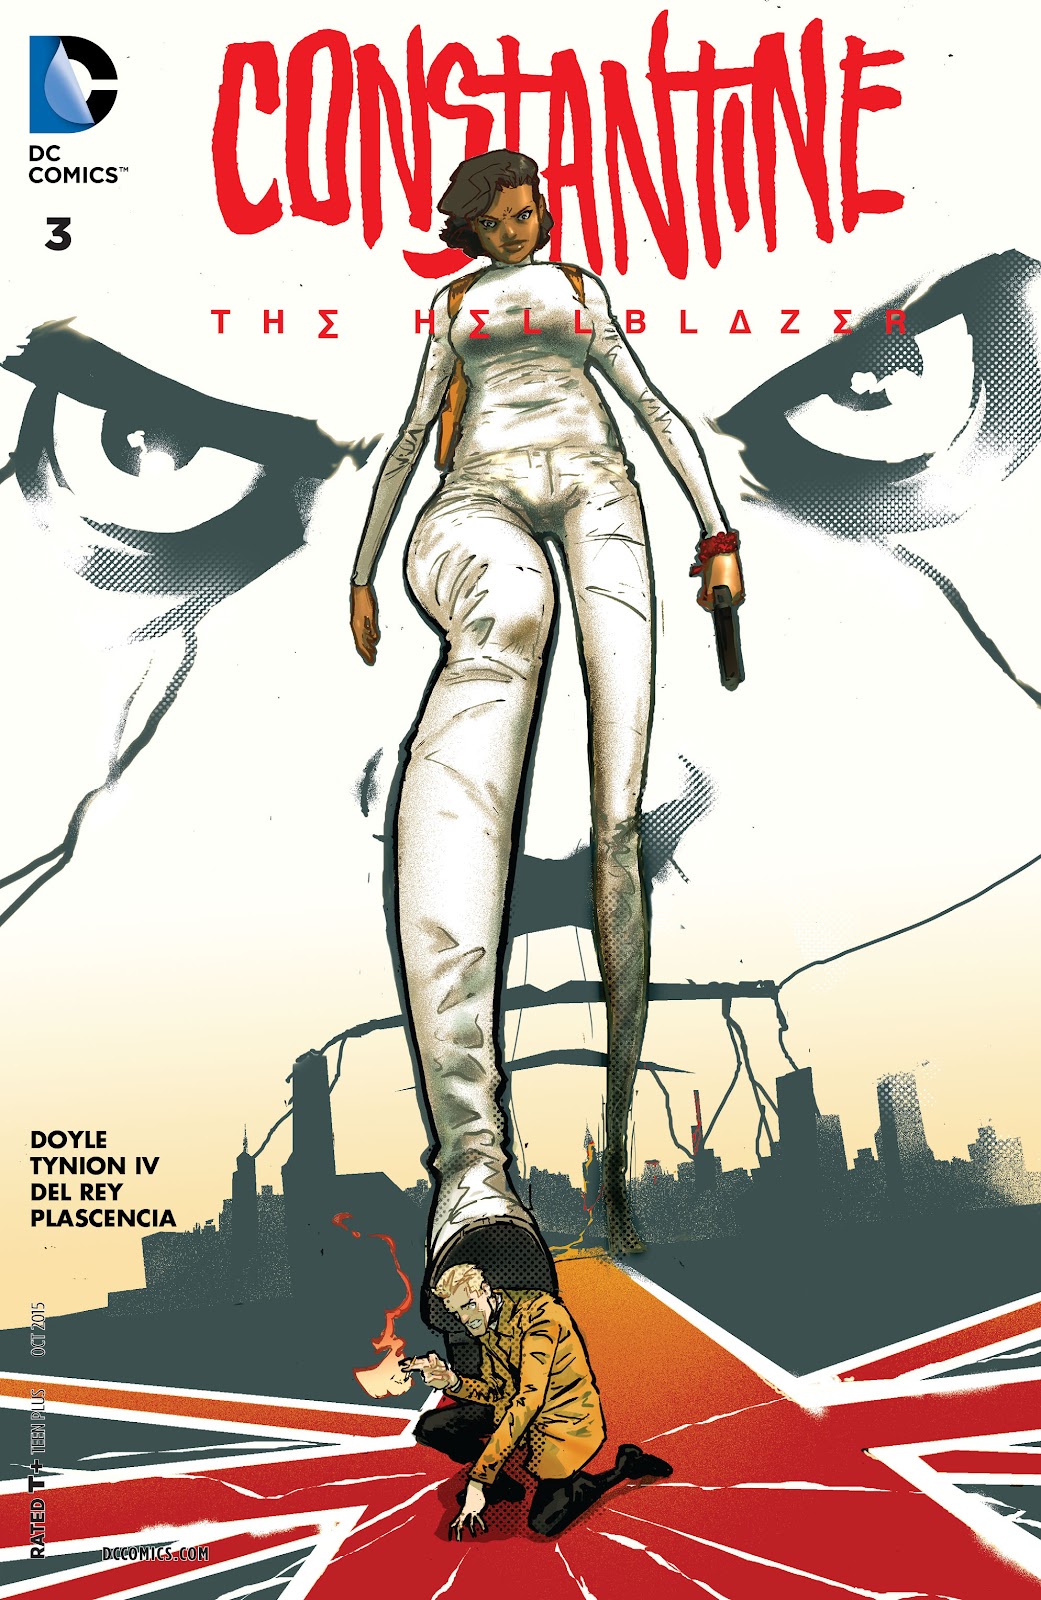 Constantine: The Hellblazer issue 3 - Page 1